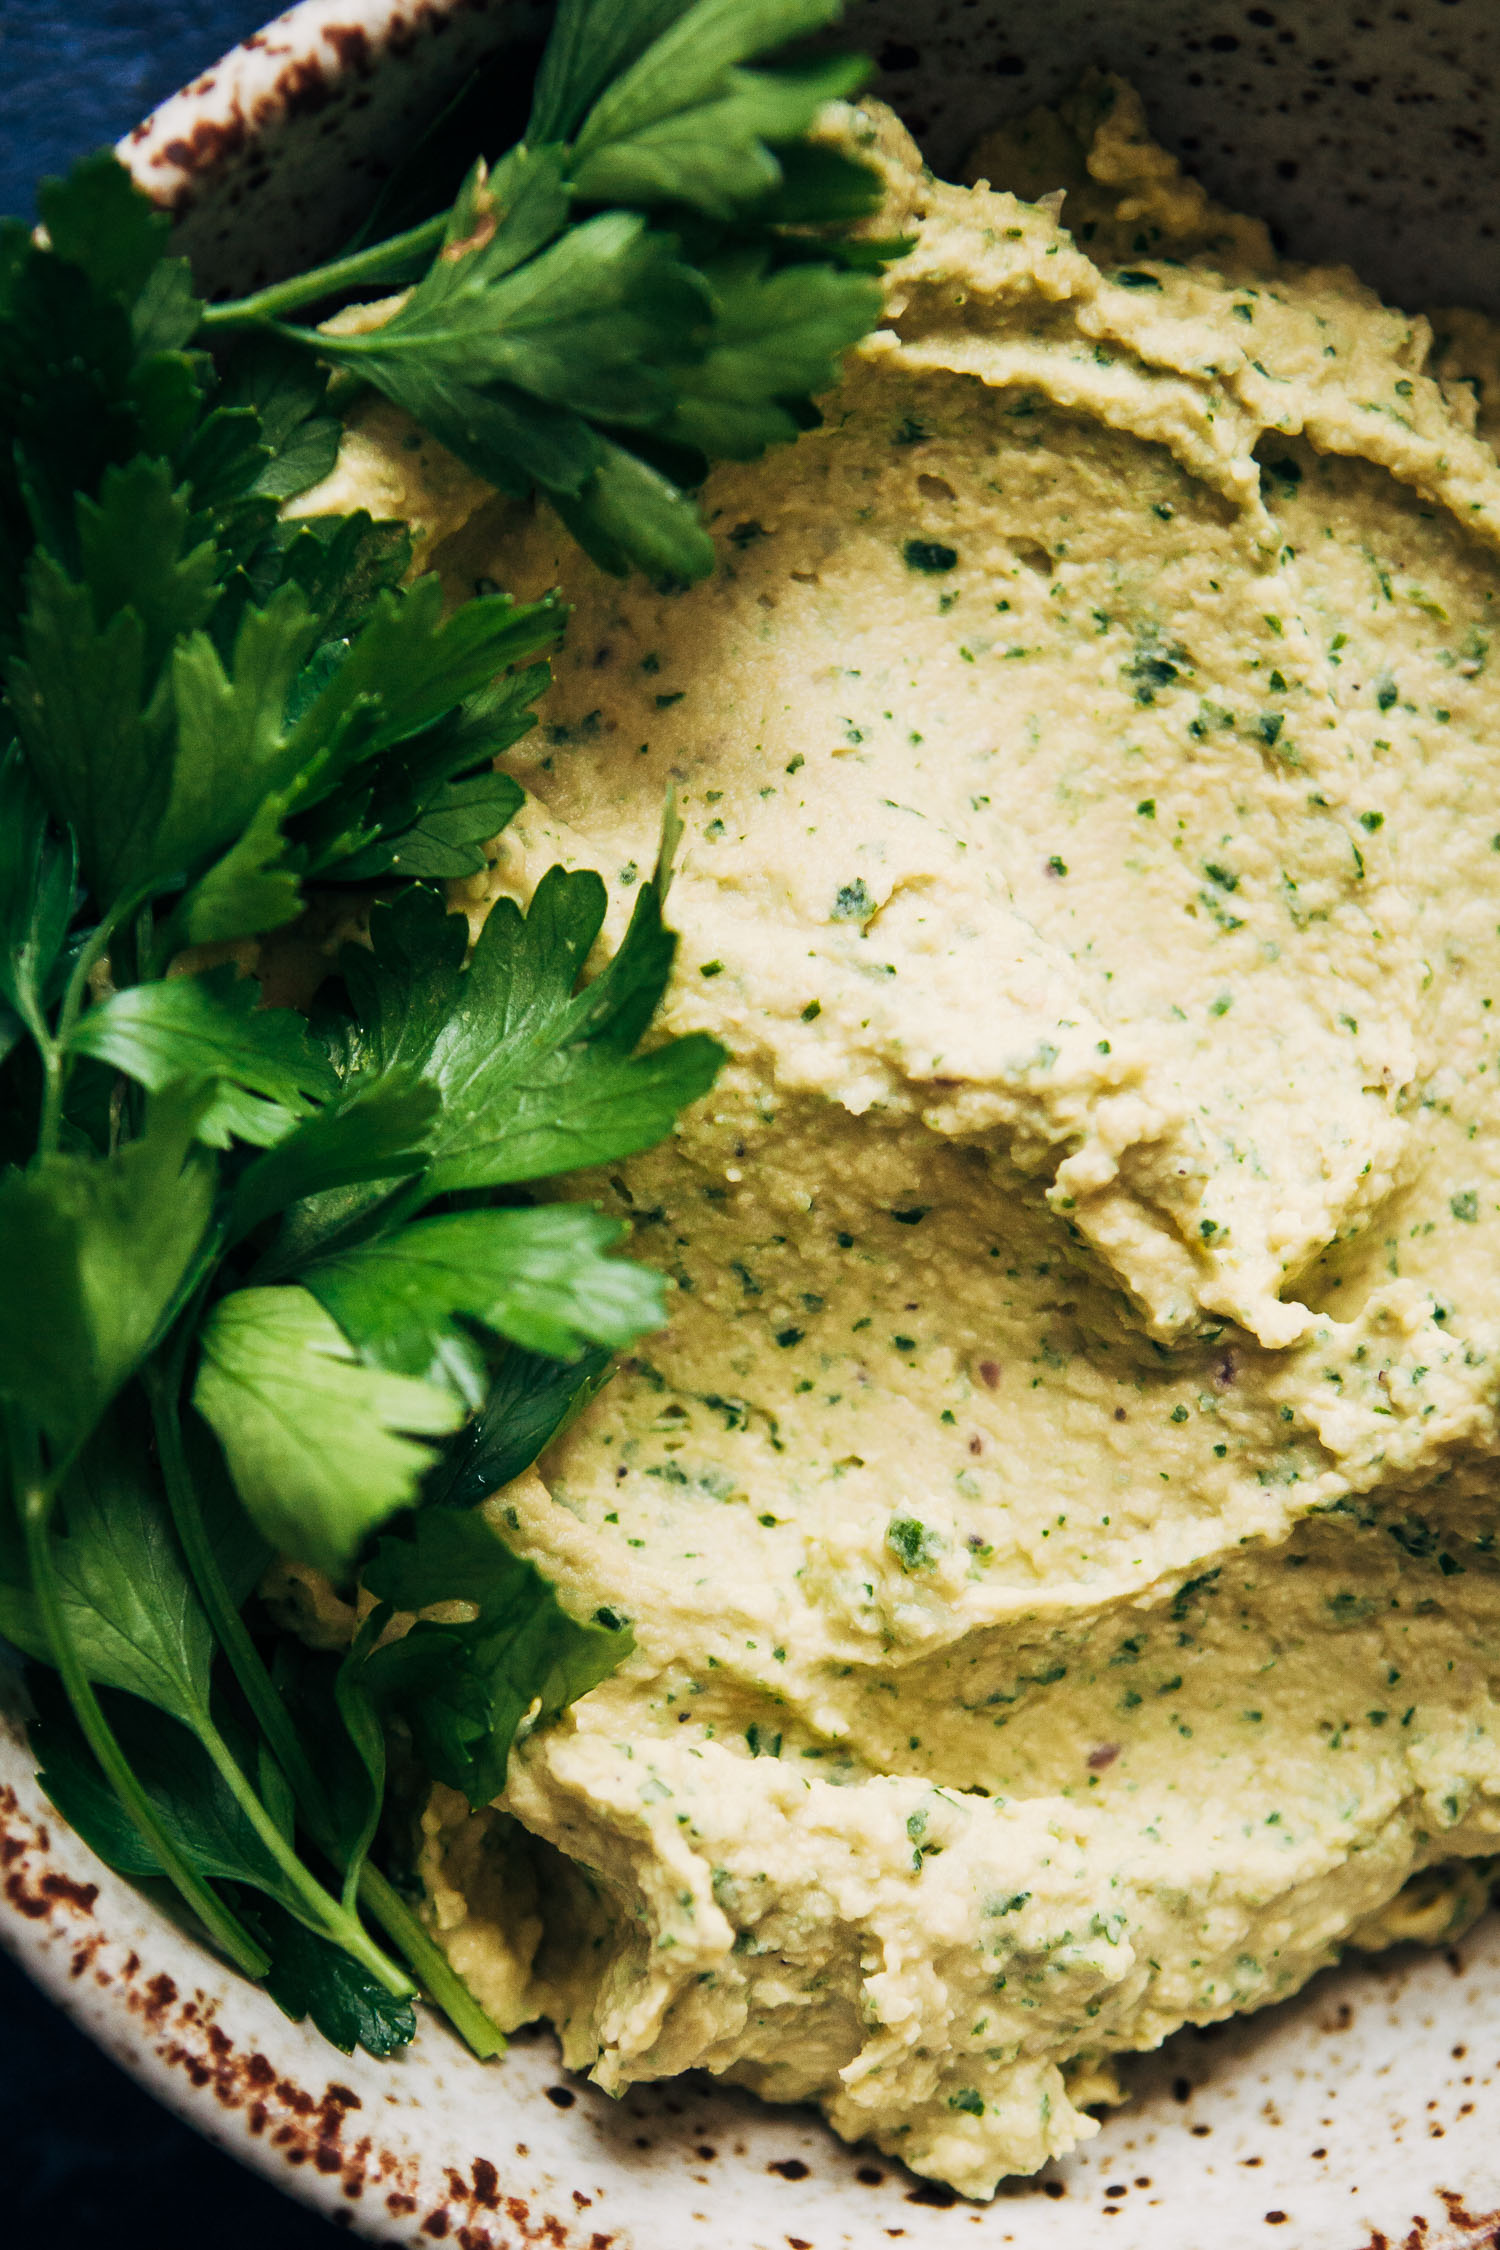 Vegan Green Goddess Hummus | Well and Full | #healthy #vegan #recipe